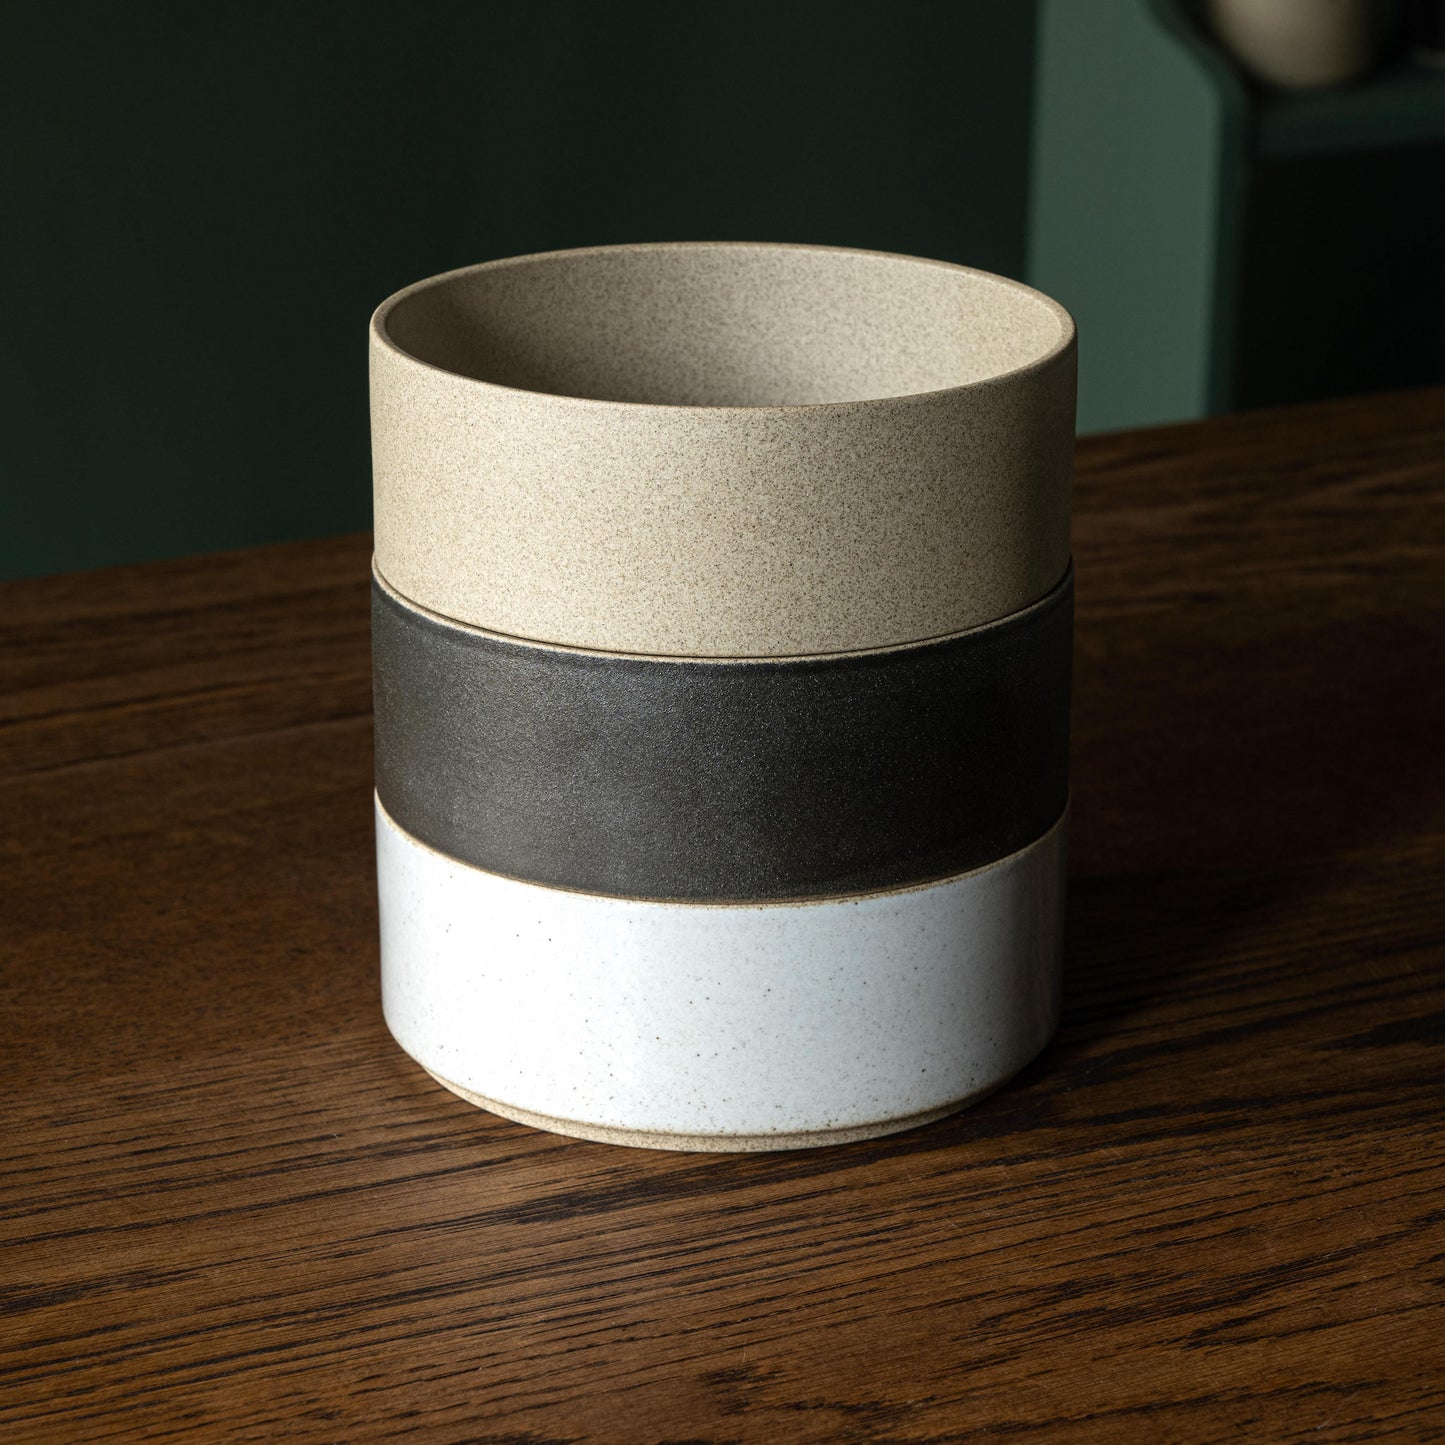 Hasami Porcelain stacking bowls